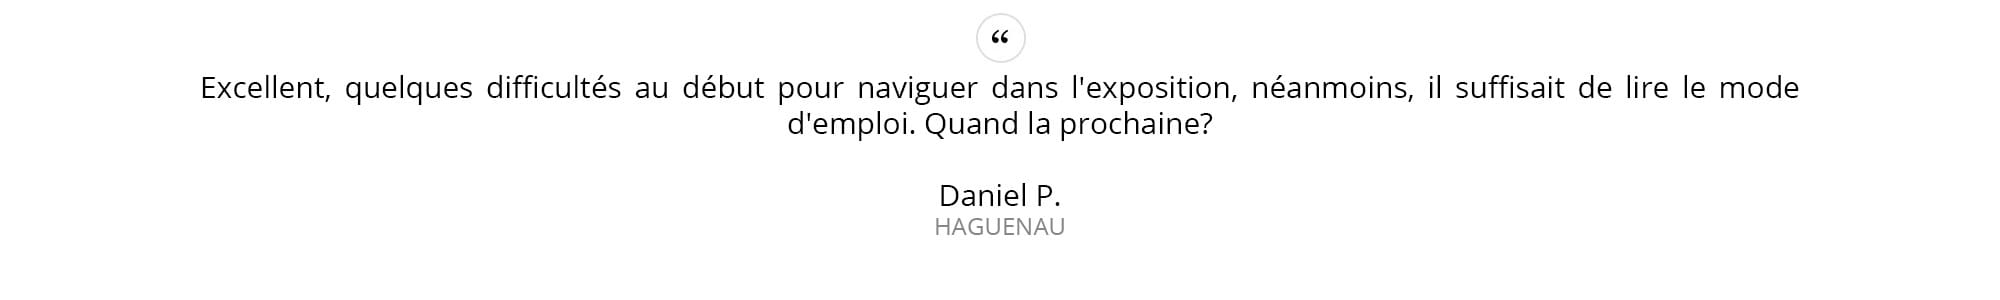 Daniel-P.---HAGUENAU